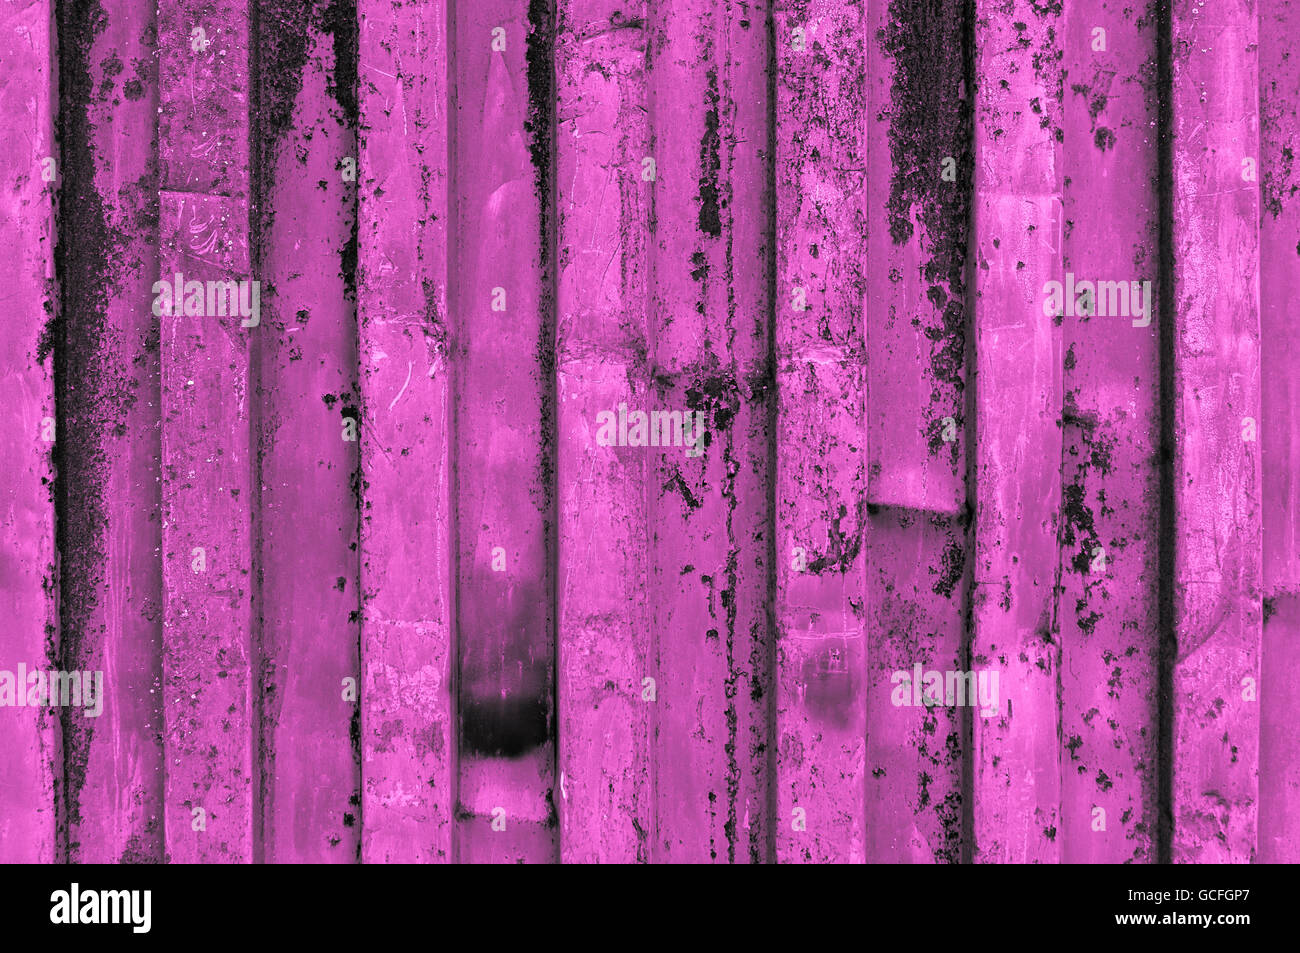 rough and rusty purple pink or purplish pinkish violet corrugated iron metal surface close-up Stock Photo